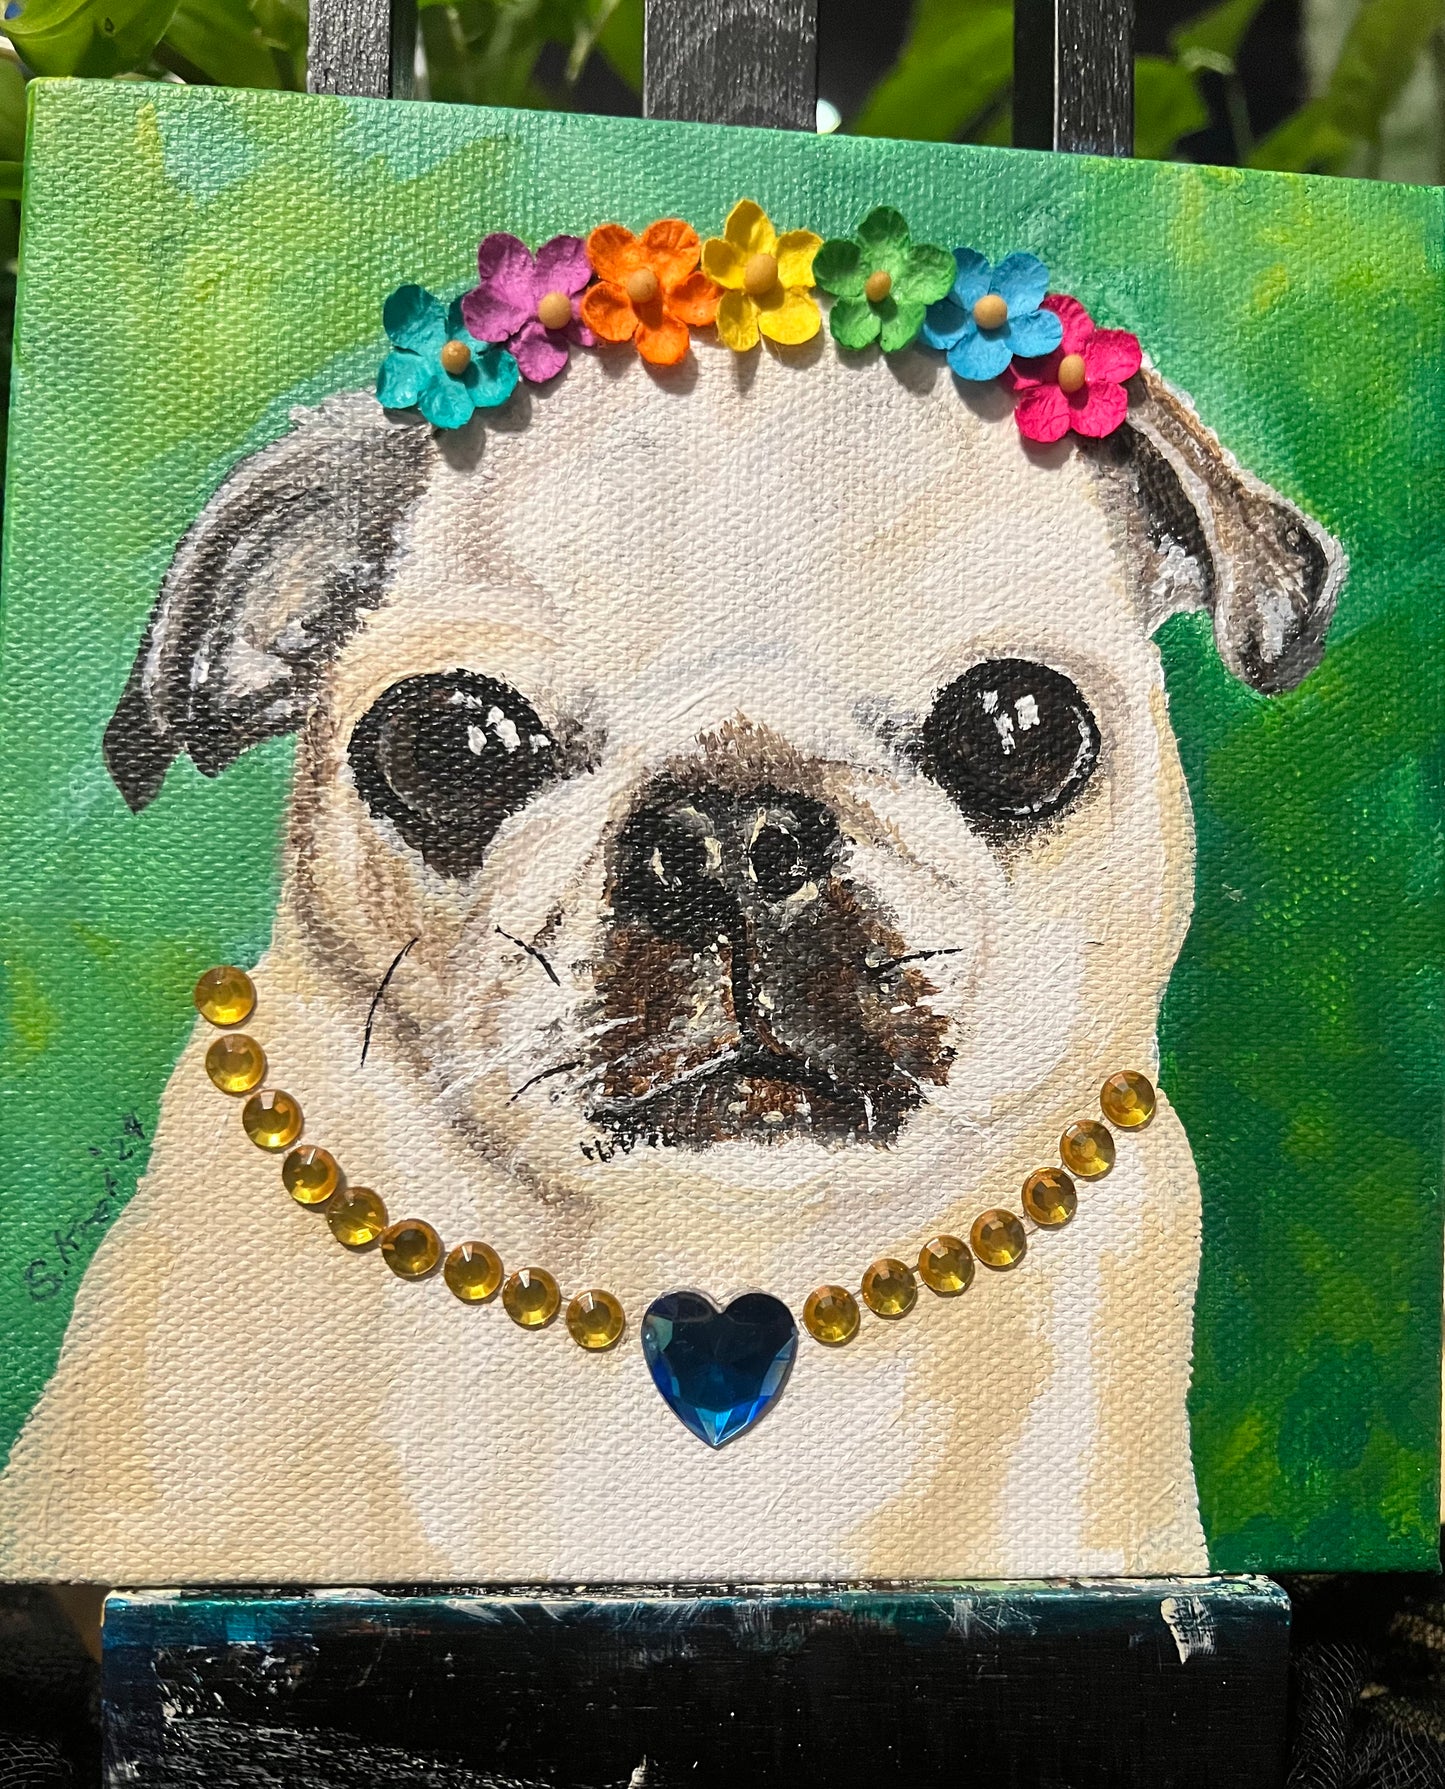 Original Painting, Senior Pug Girl, Katie, Acrylic Painting, Mixed Media